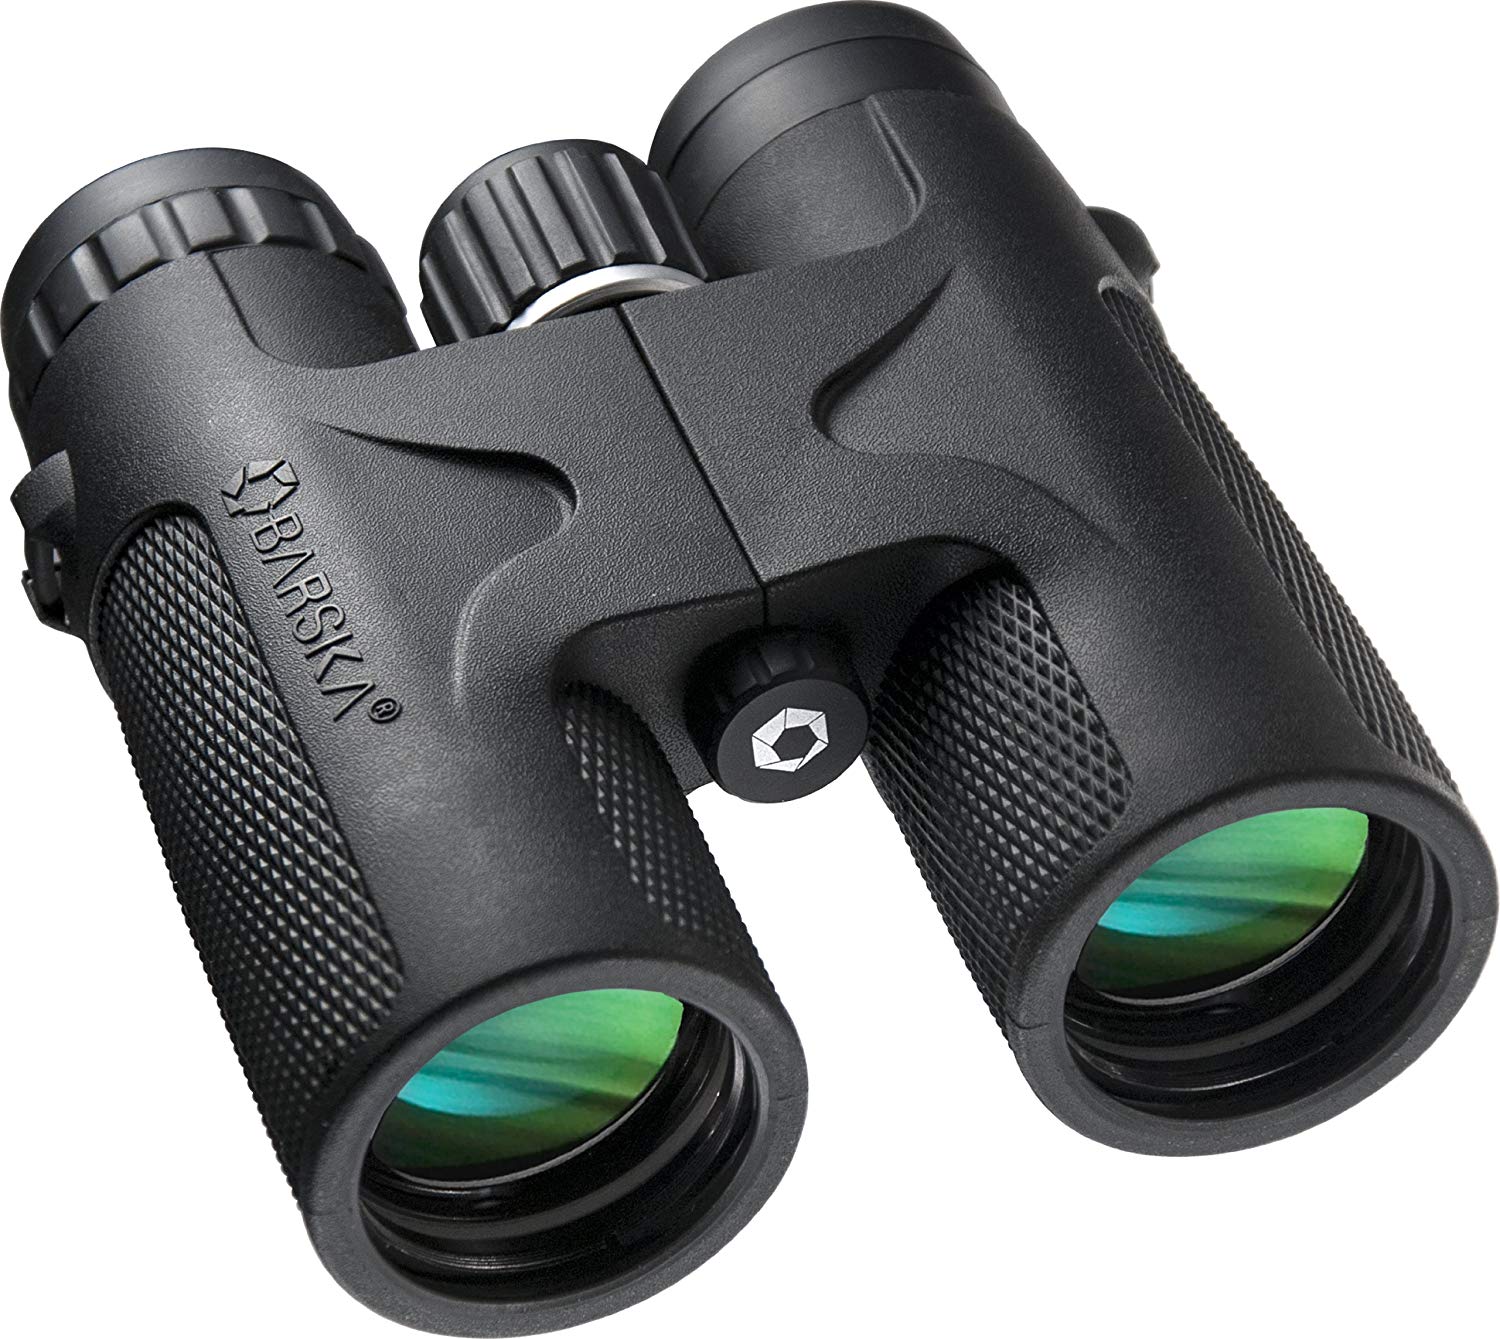 Barska 10x25 WP Blackhawk Binoculars - $24.16 (Free S/H over $25)